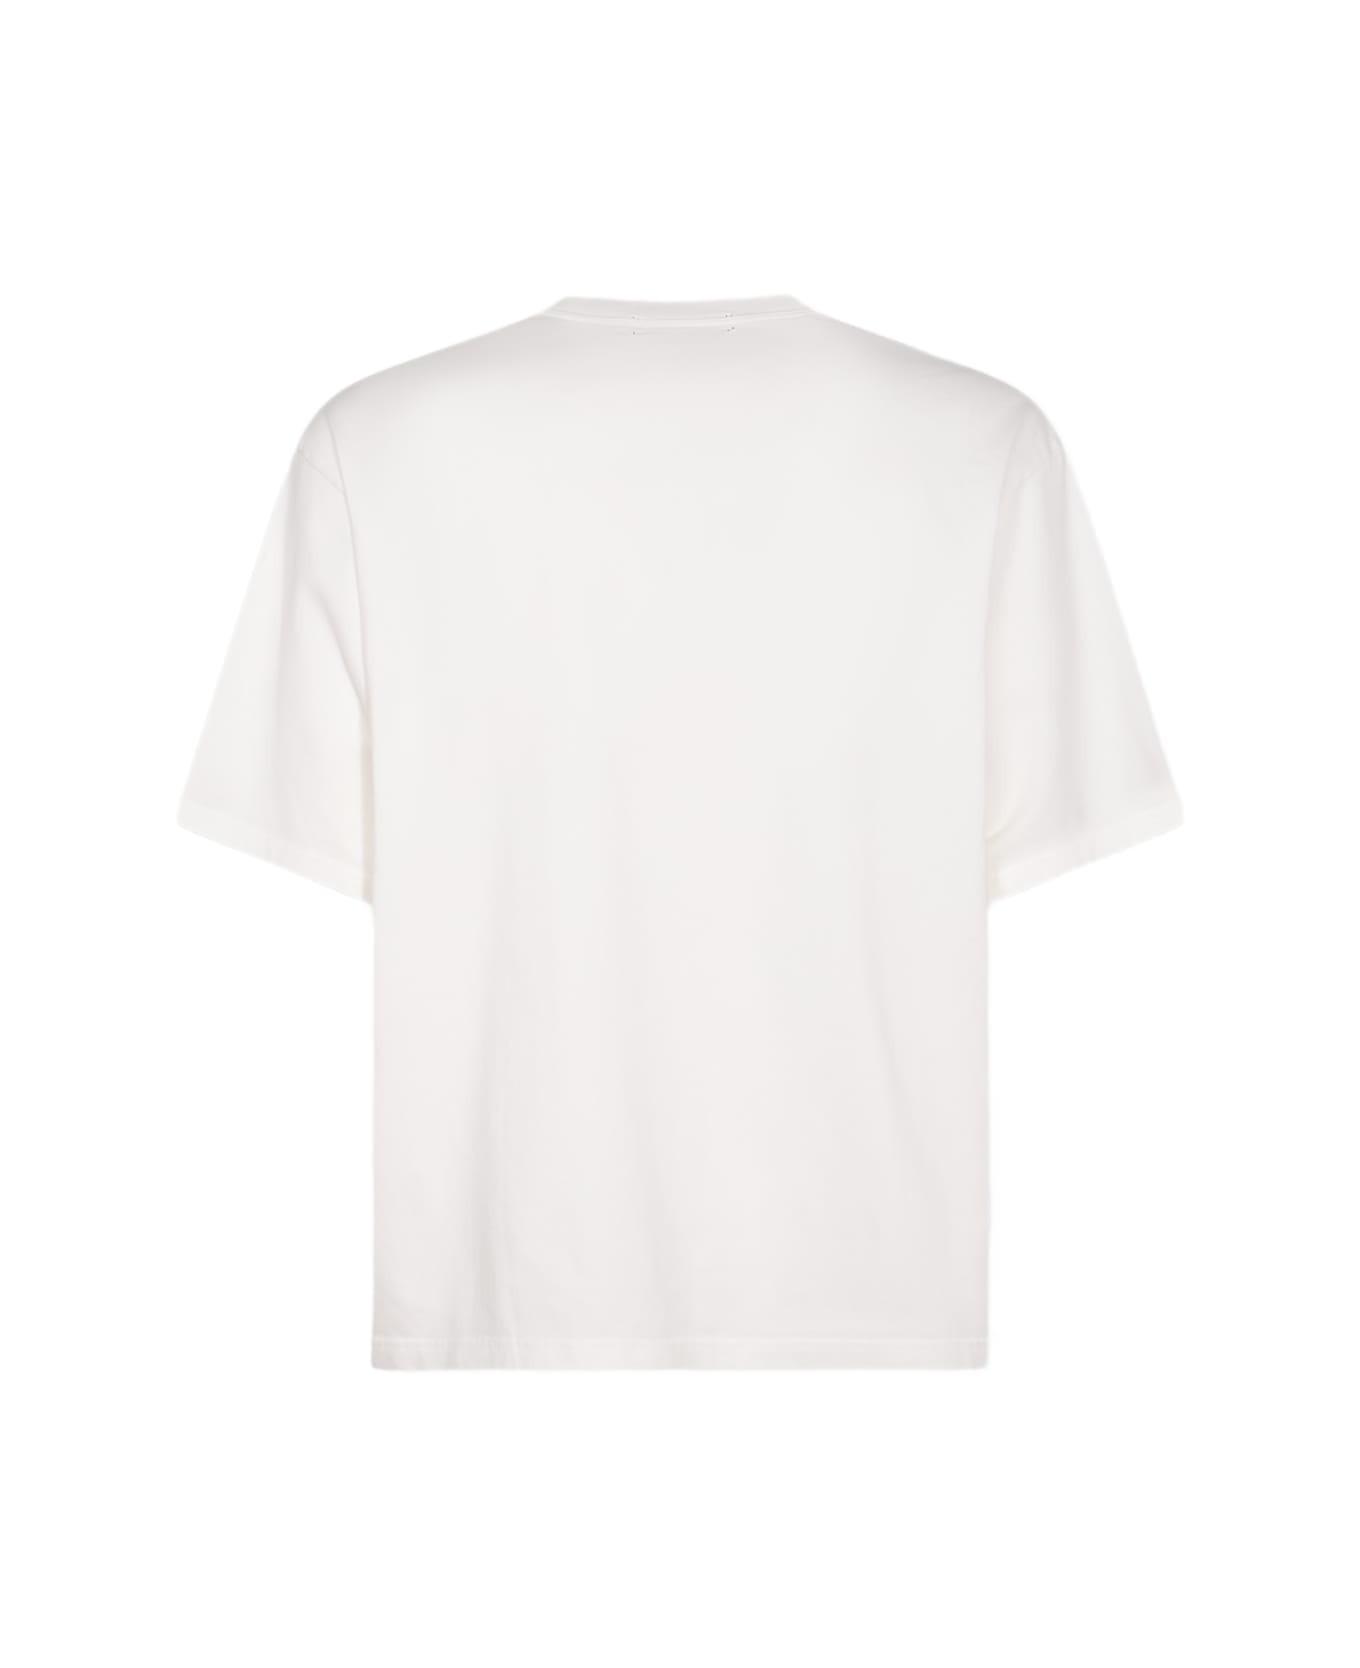 Undercover Jun Takahashi White Cotton Kosmik T-shirt シャツ